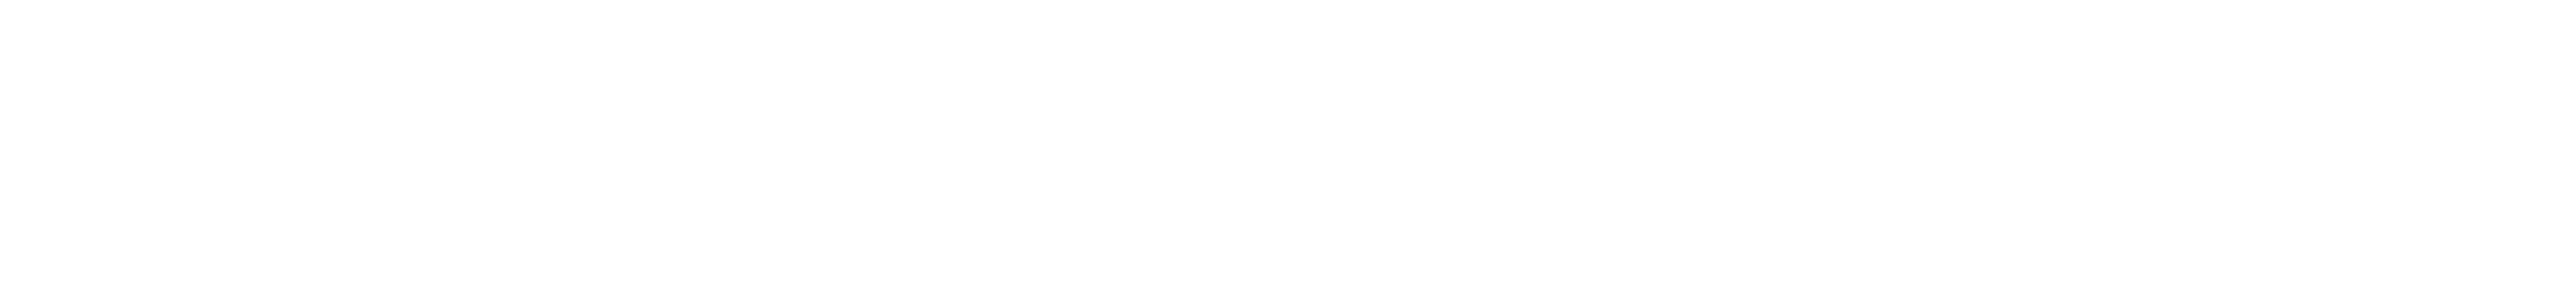 dangerTV logo